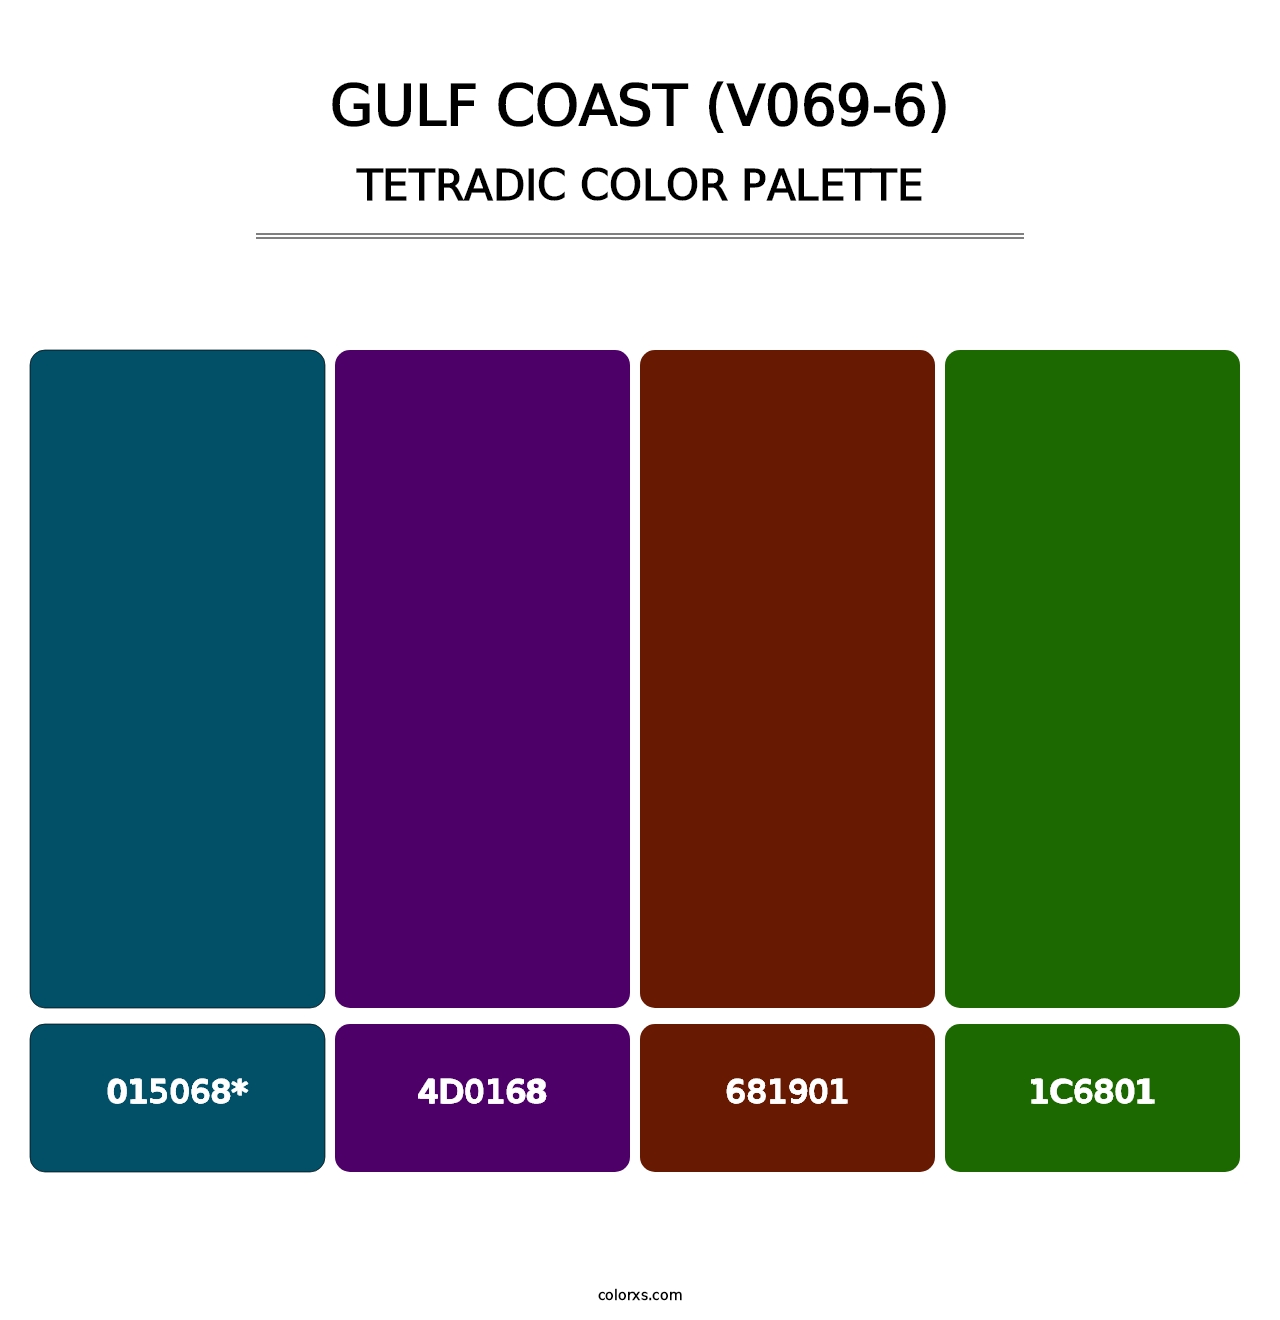 Gulf Coast (V069-6) - Tetradic Color Palette